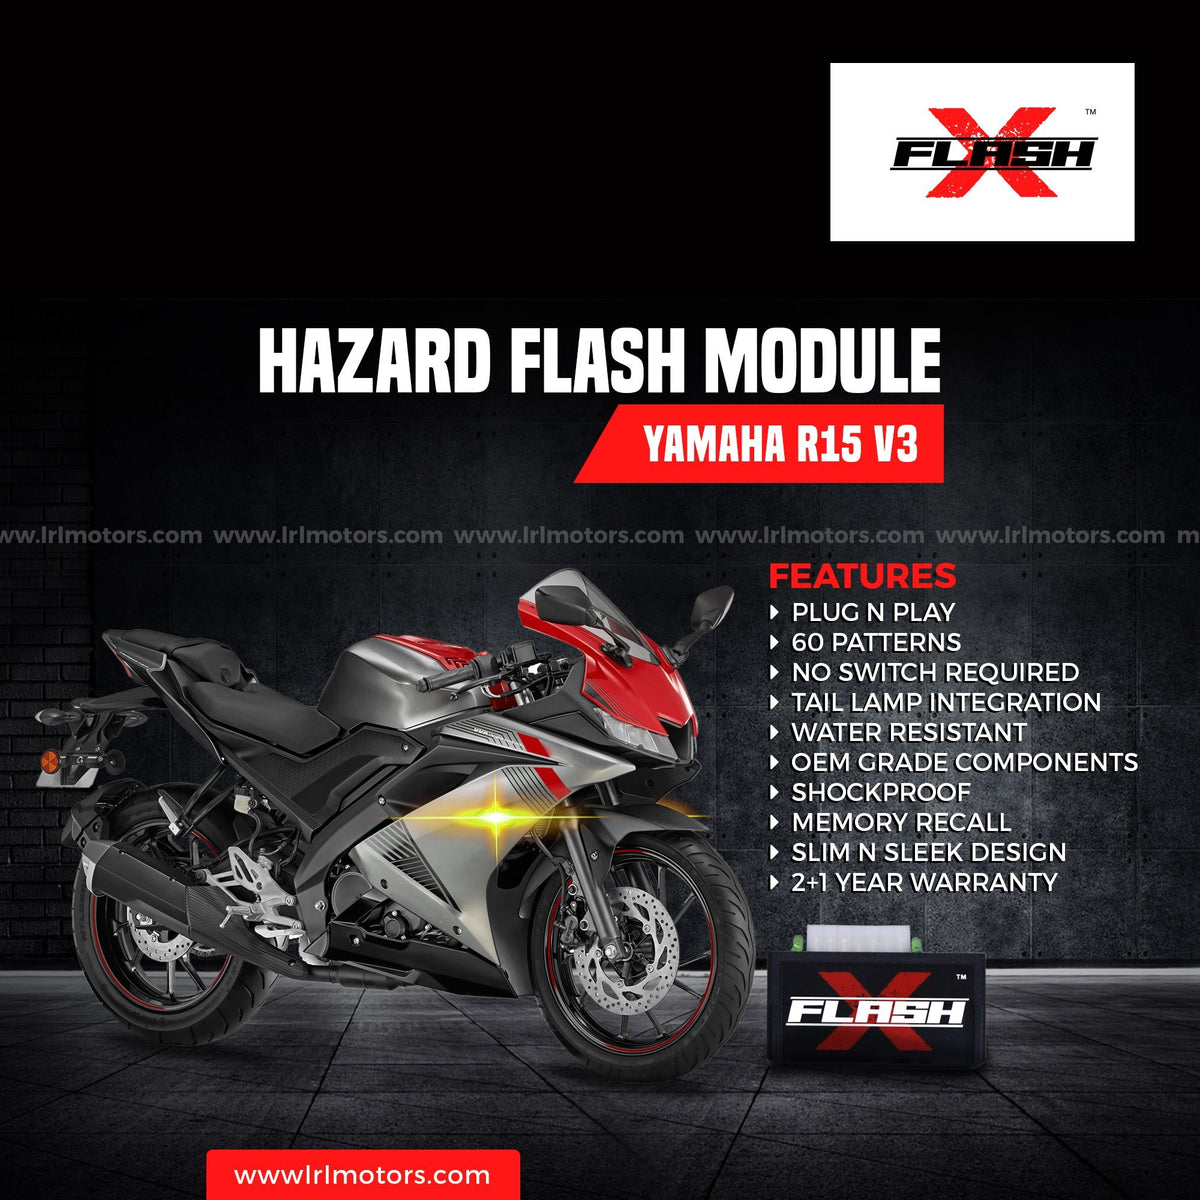 FlashX Hazard Flash Module, Blinker/Flasher for Yamaha r15 v3 - LRL Motors